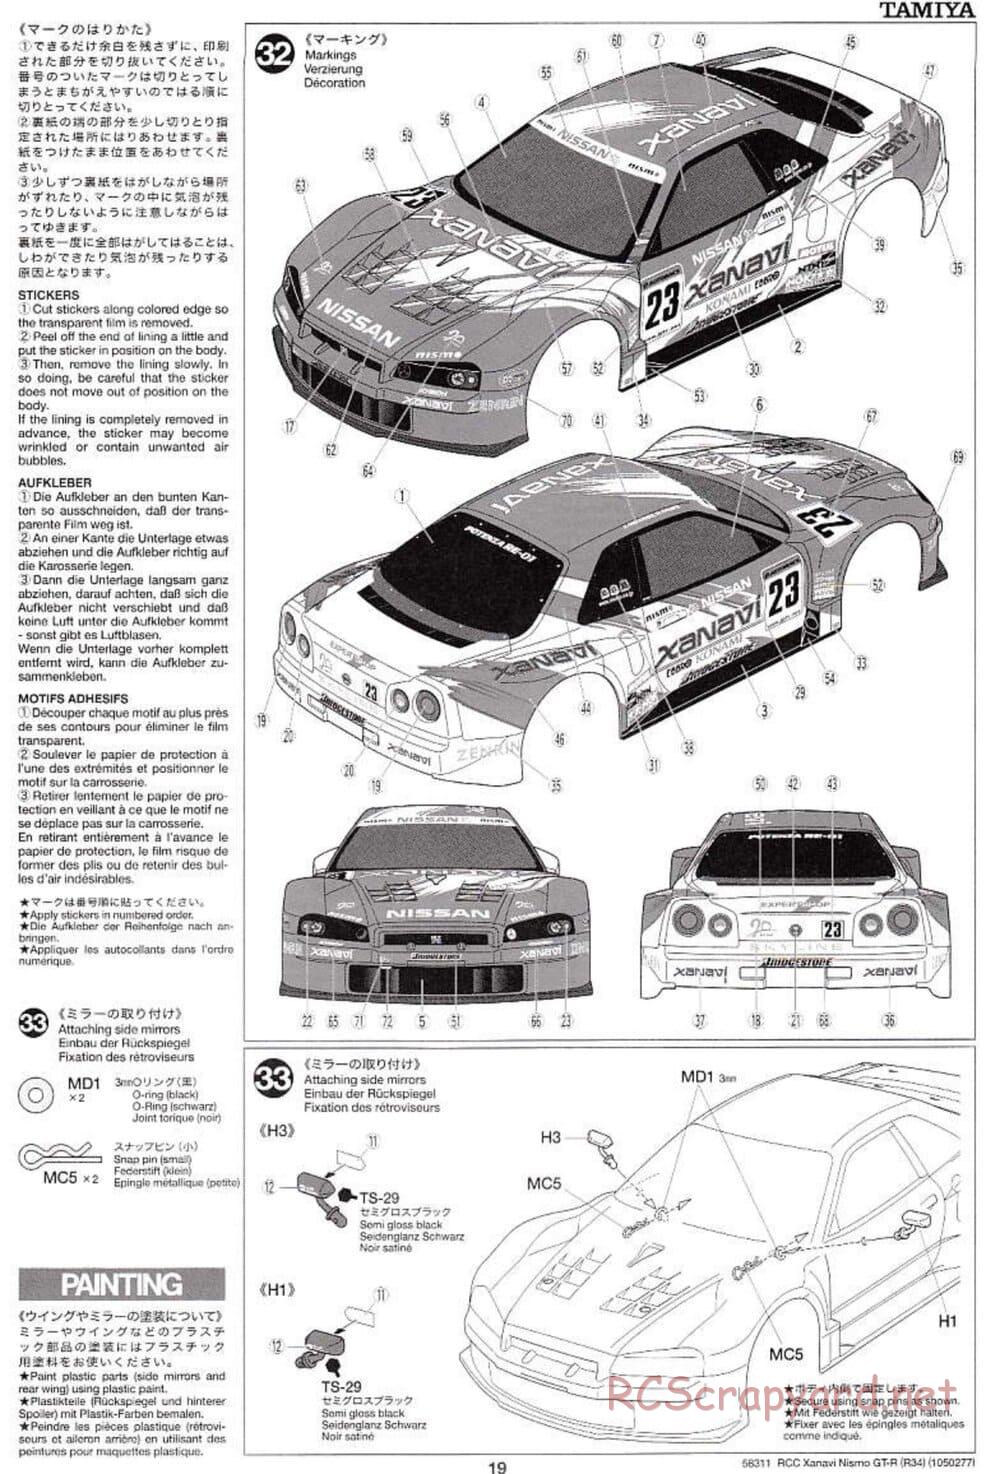 Tamiya - Xanavi Nismo GT-R (R34) - TB-02 Chassis - Manual - Page 19